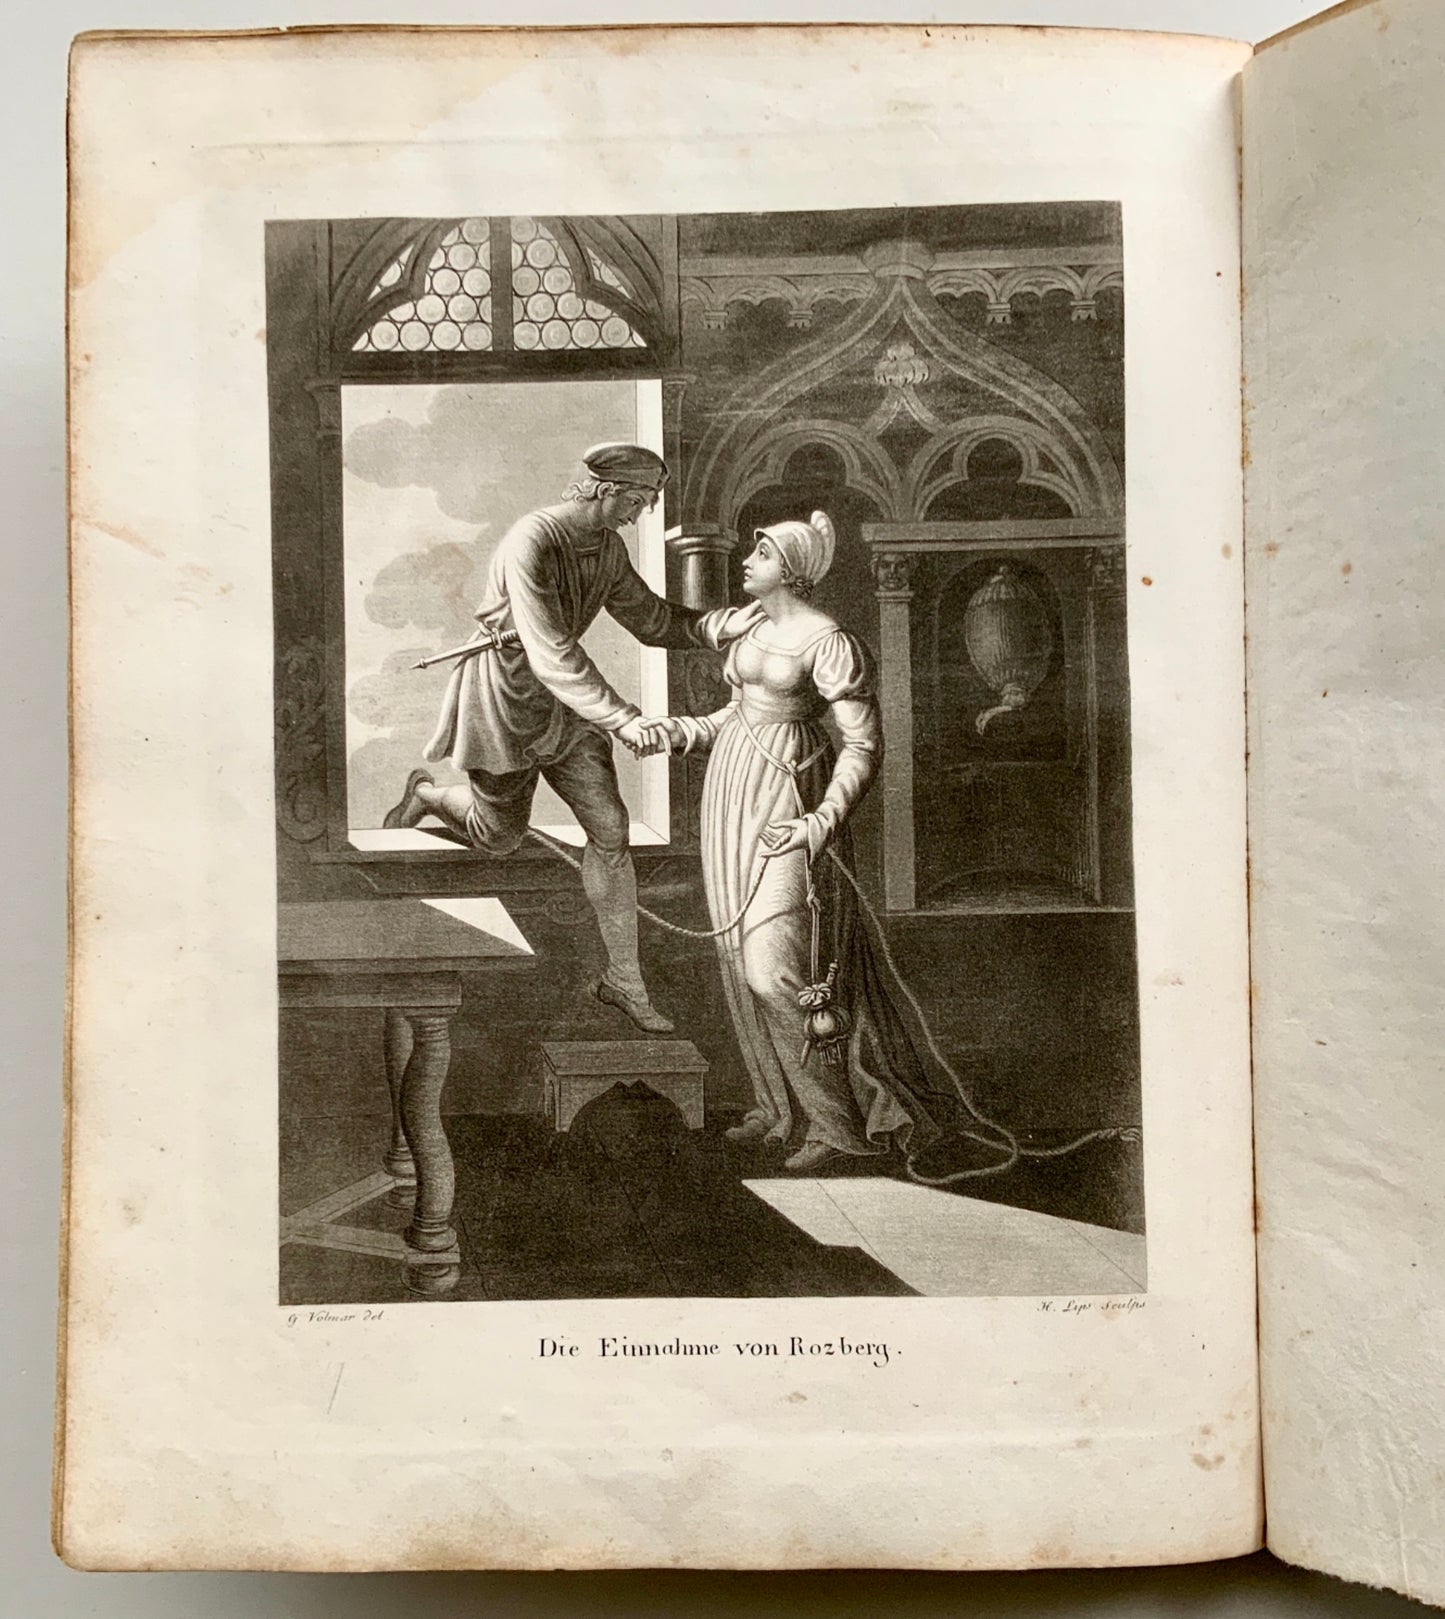 1822 Lips - Historisch merkwürdige Schweizer-Scenen 24 aquatints Switzerland - Book